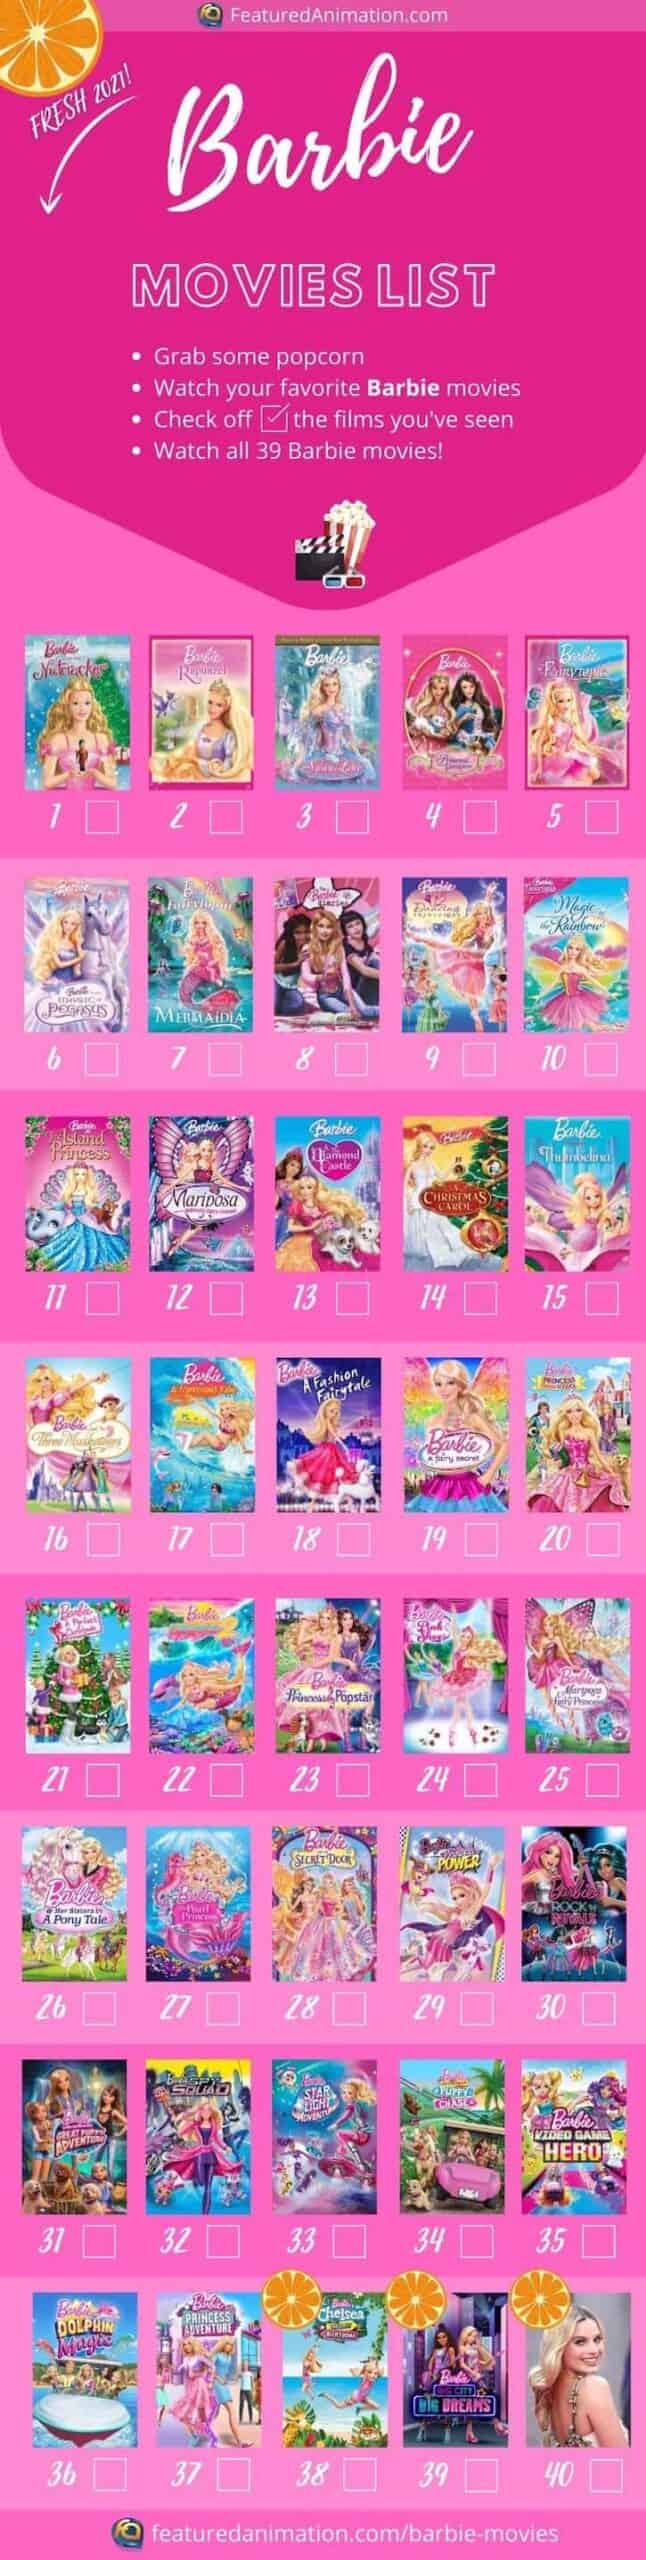 All 39 Barbie Movies Checklist 2021